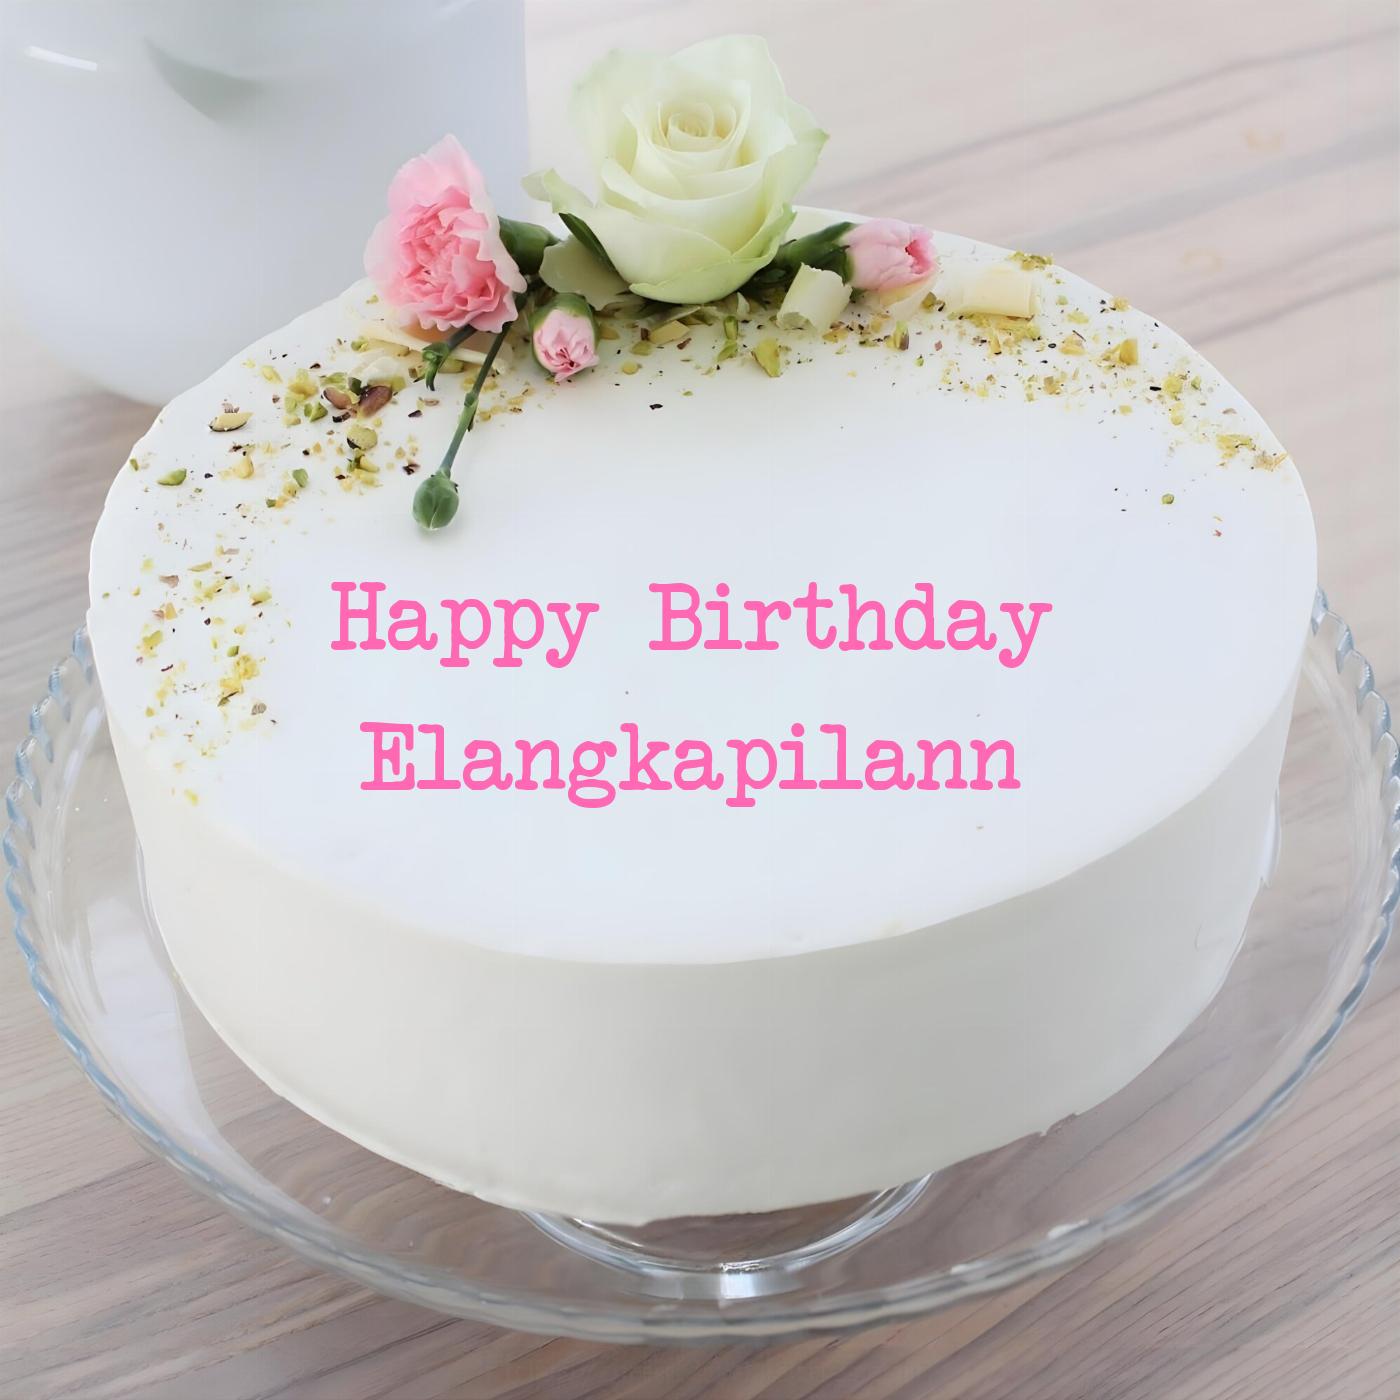 Happy Birthday Elangkapilann White Pink Roses Cake